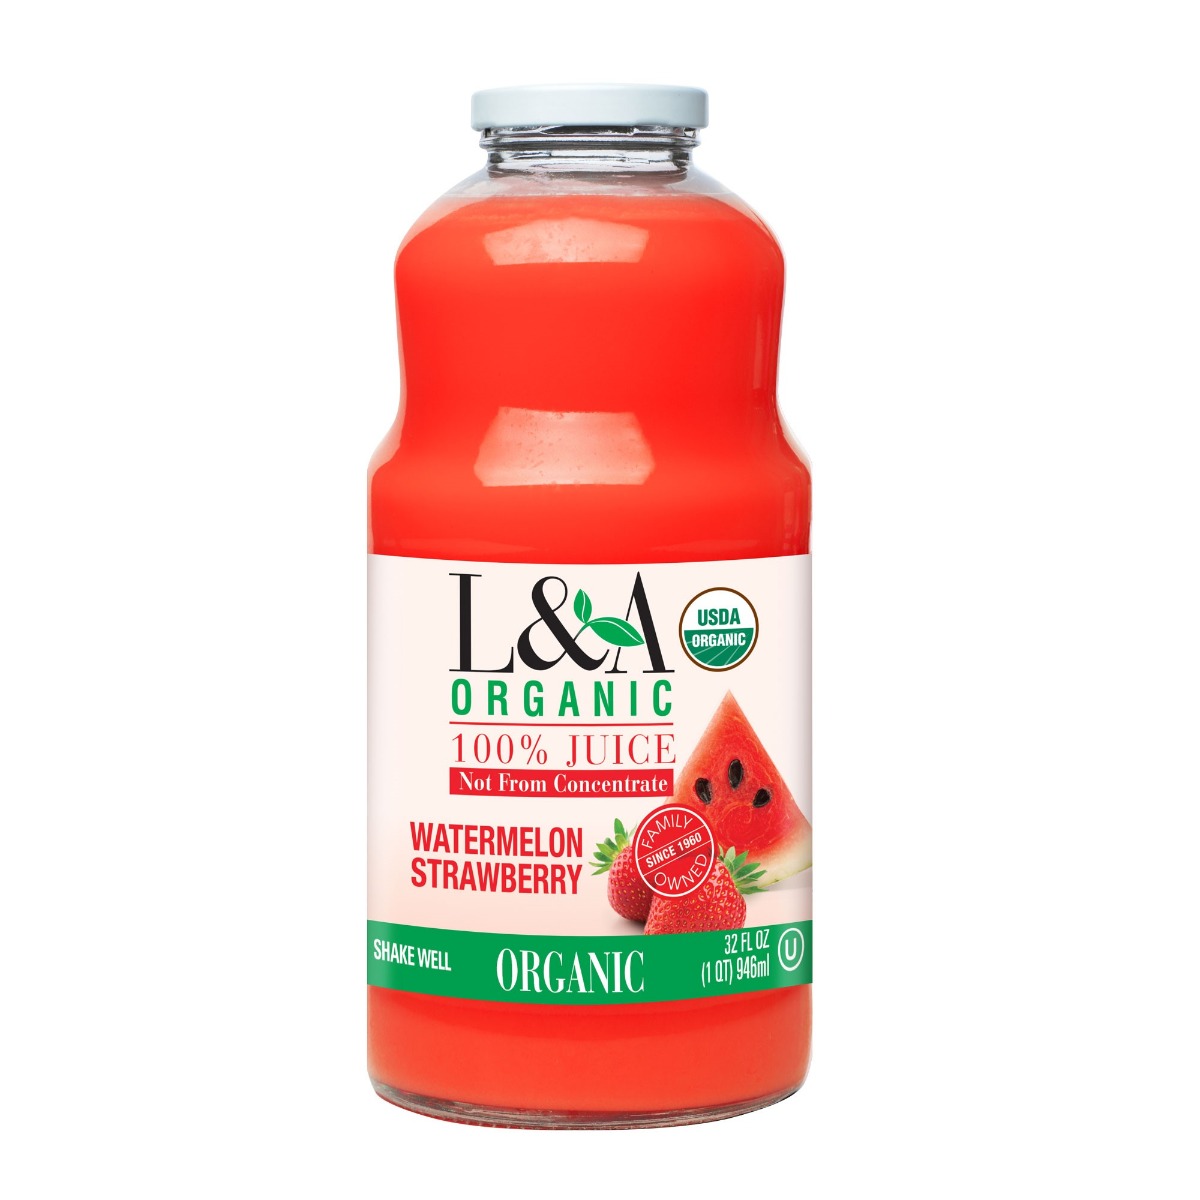 Organic 100% Juice - organic